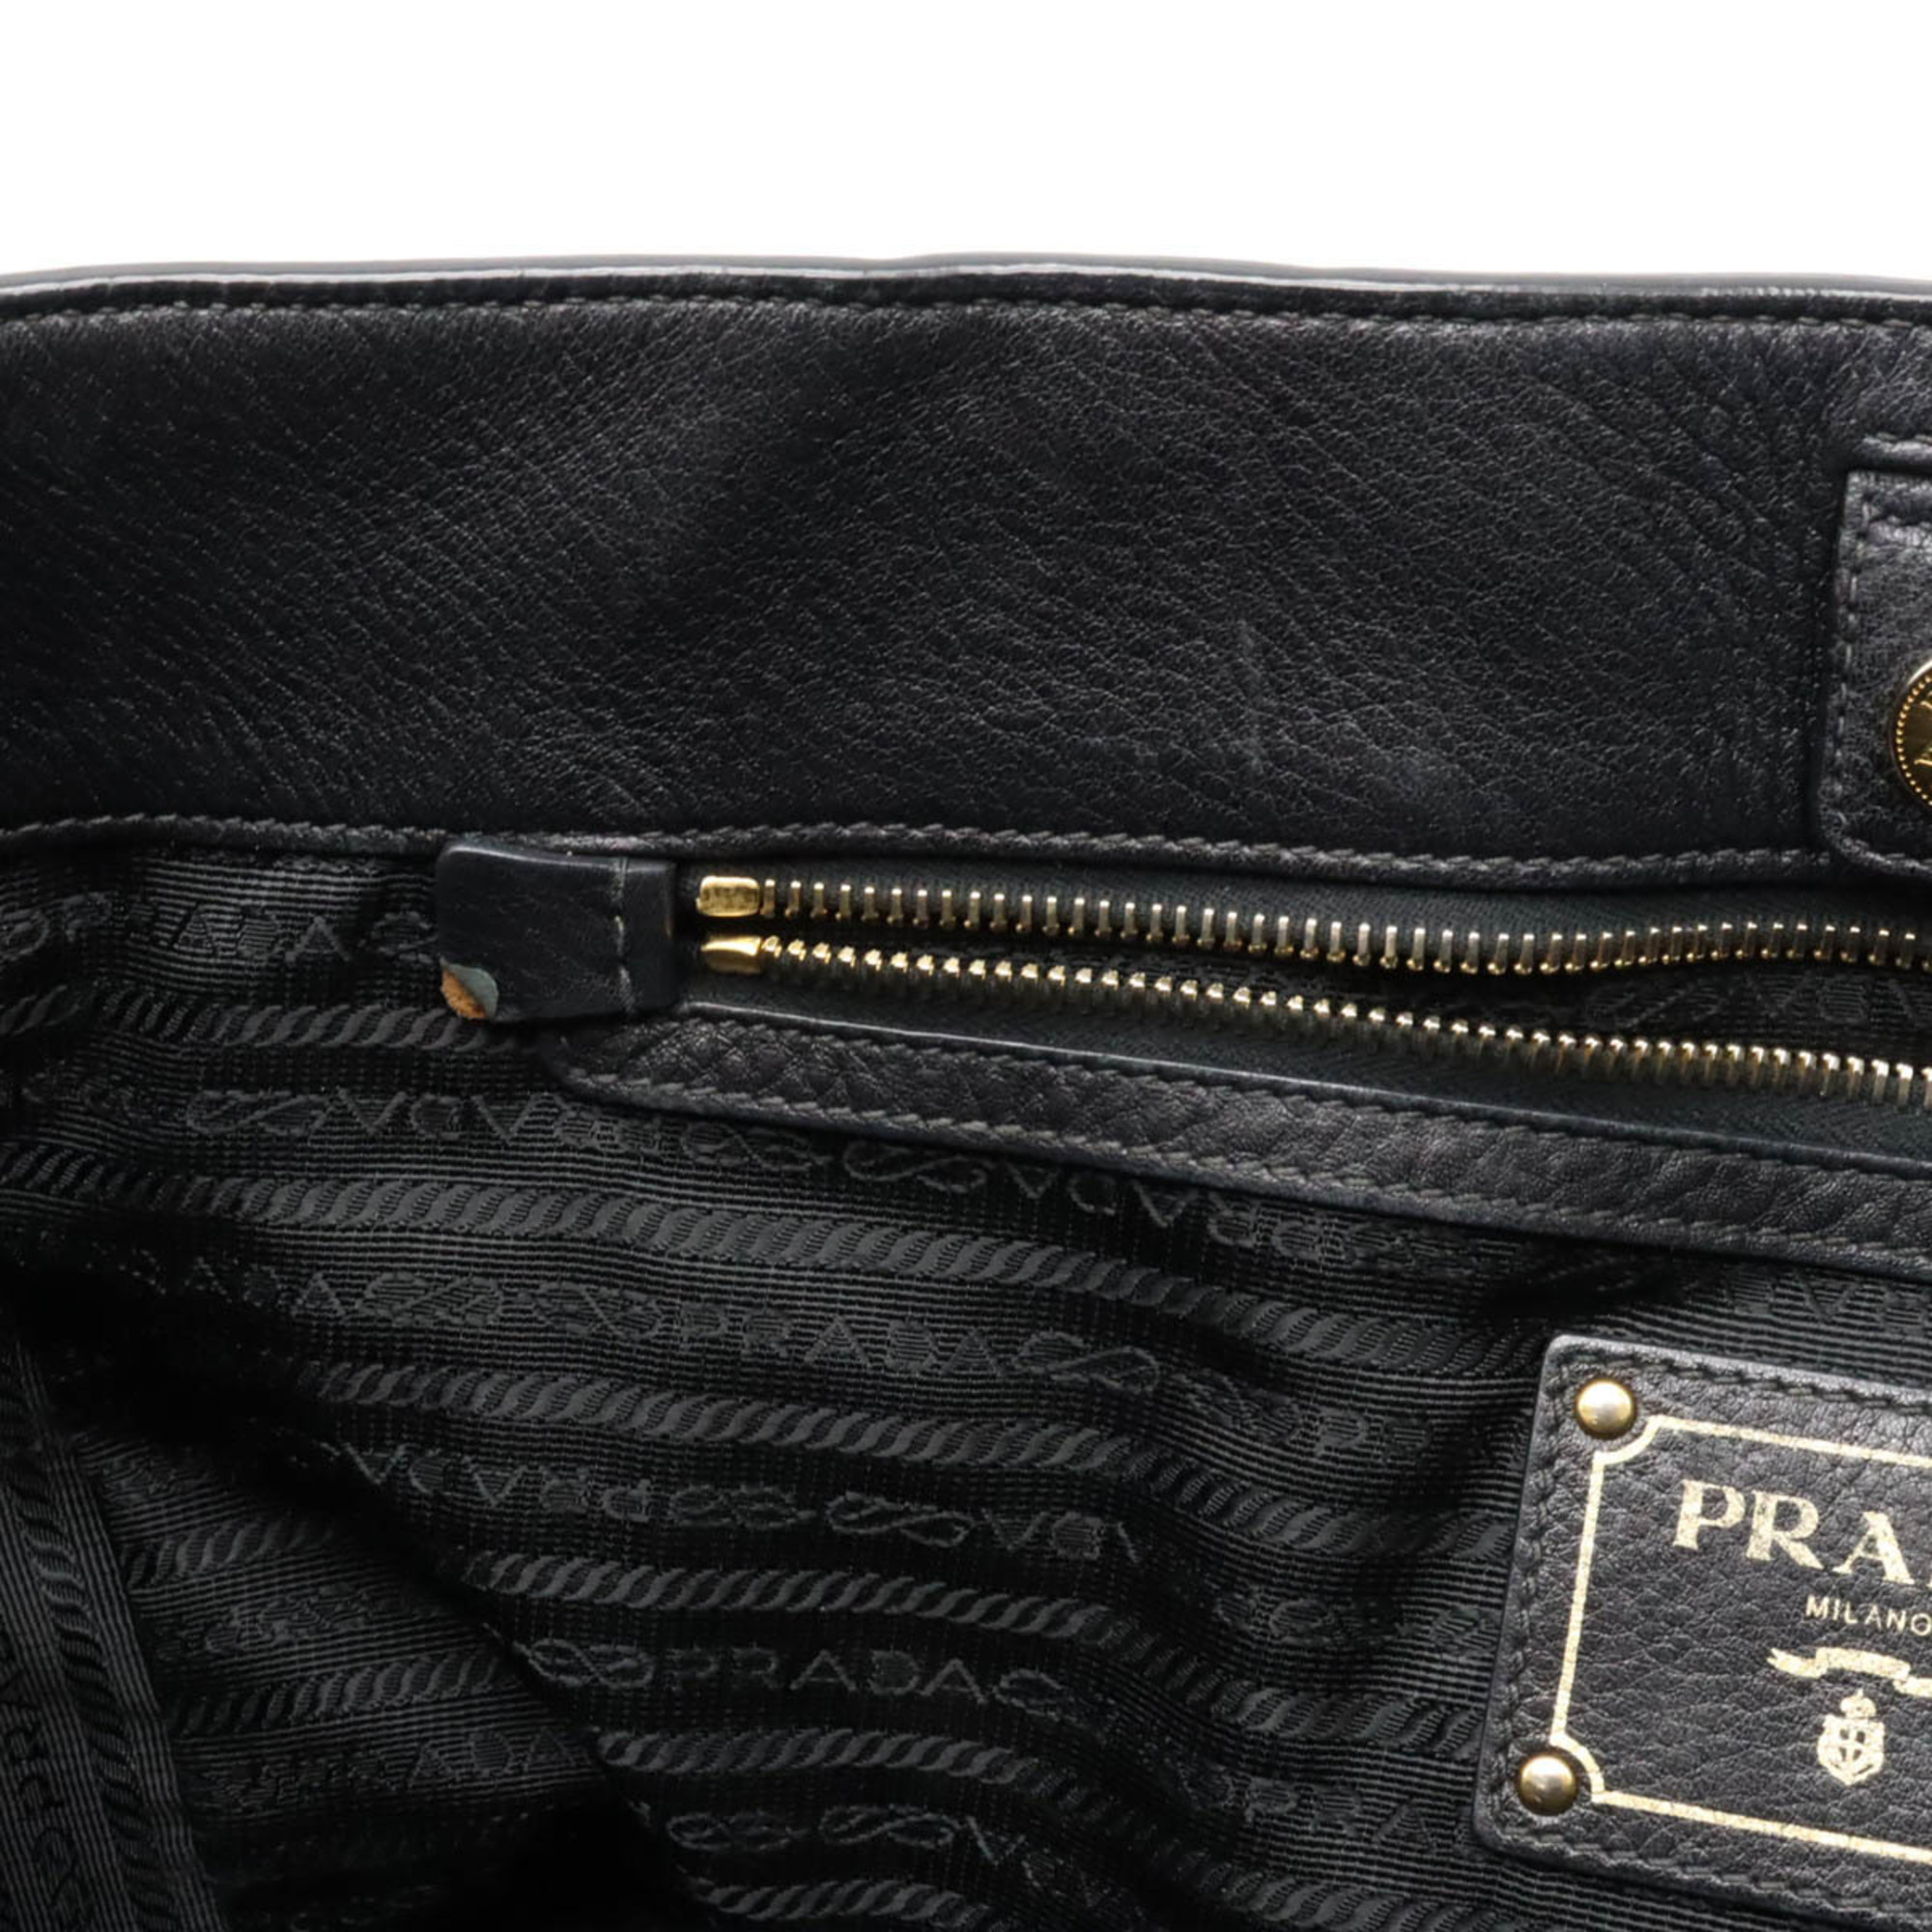 PRADA Prada Tote Bag Handbag Shoulder Leather NERO Black BN2104